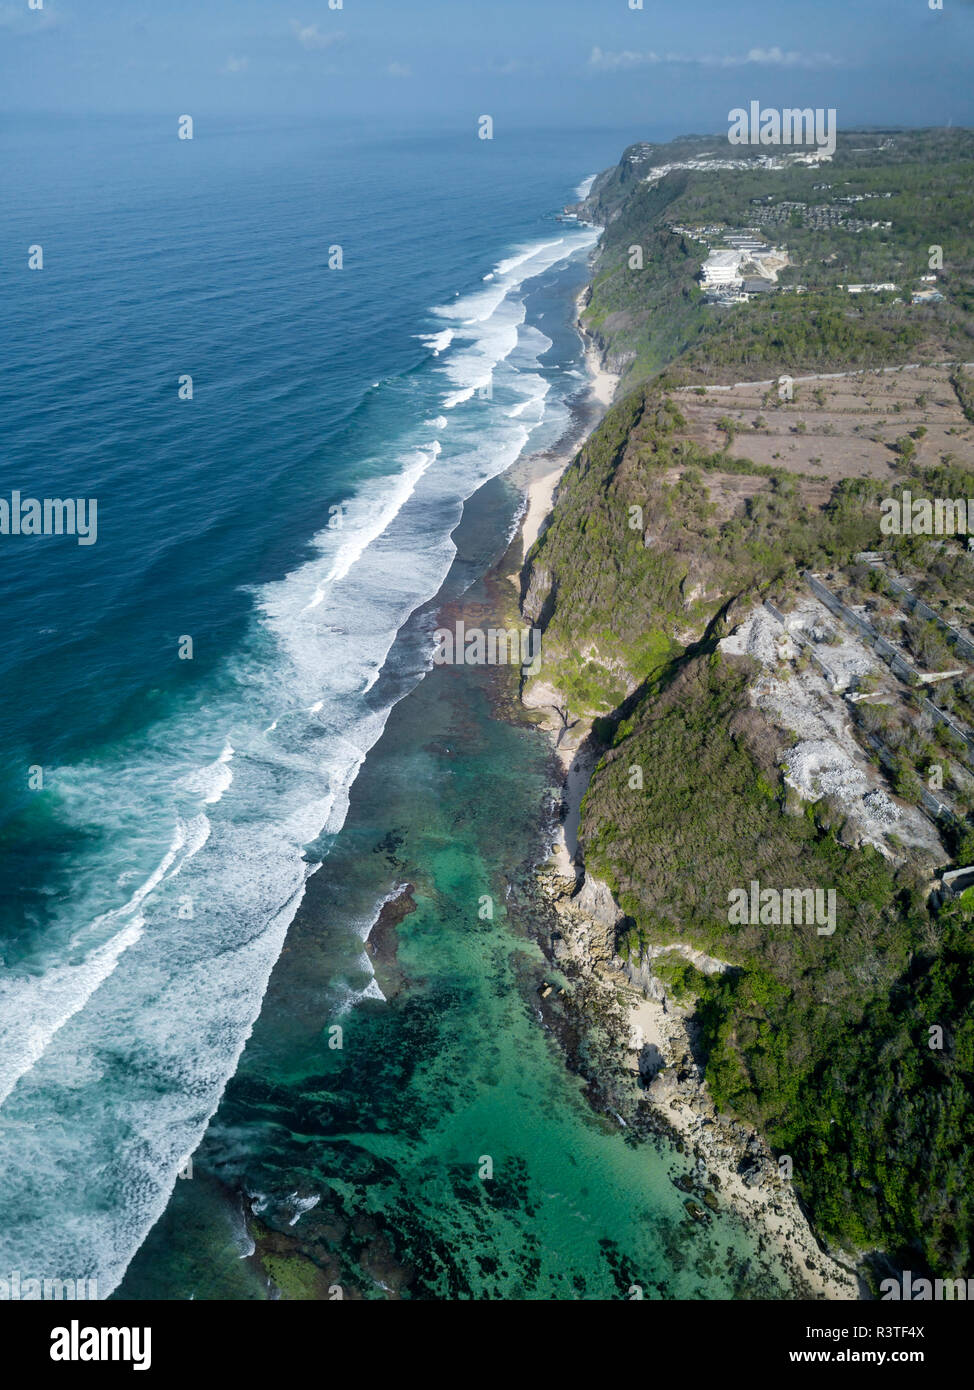 Indonesia, Bali, vista aerea del Karma Kandara beach Foto Stock